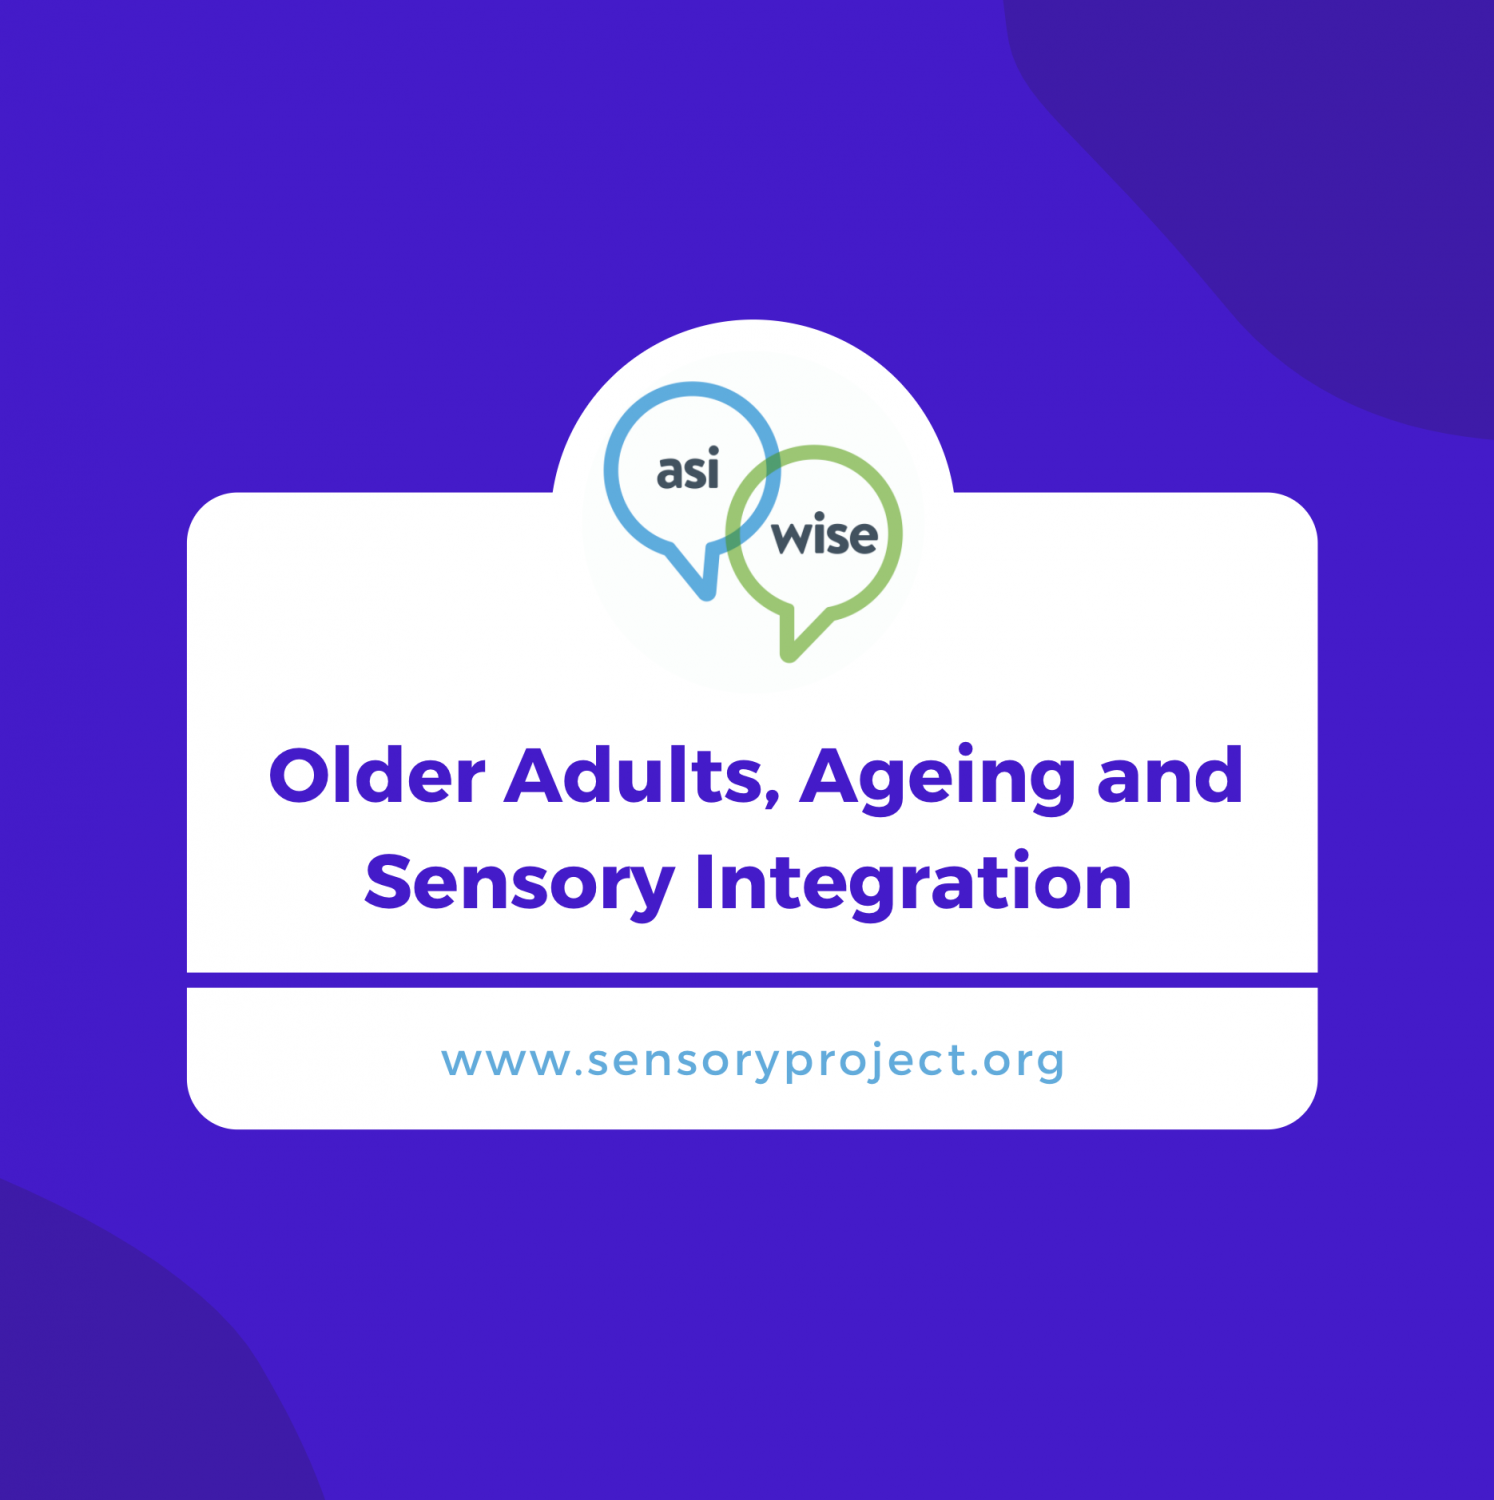 Sensory Integration and Older Adults